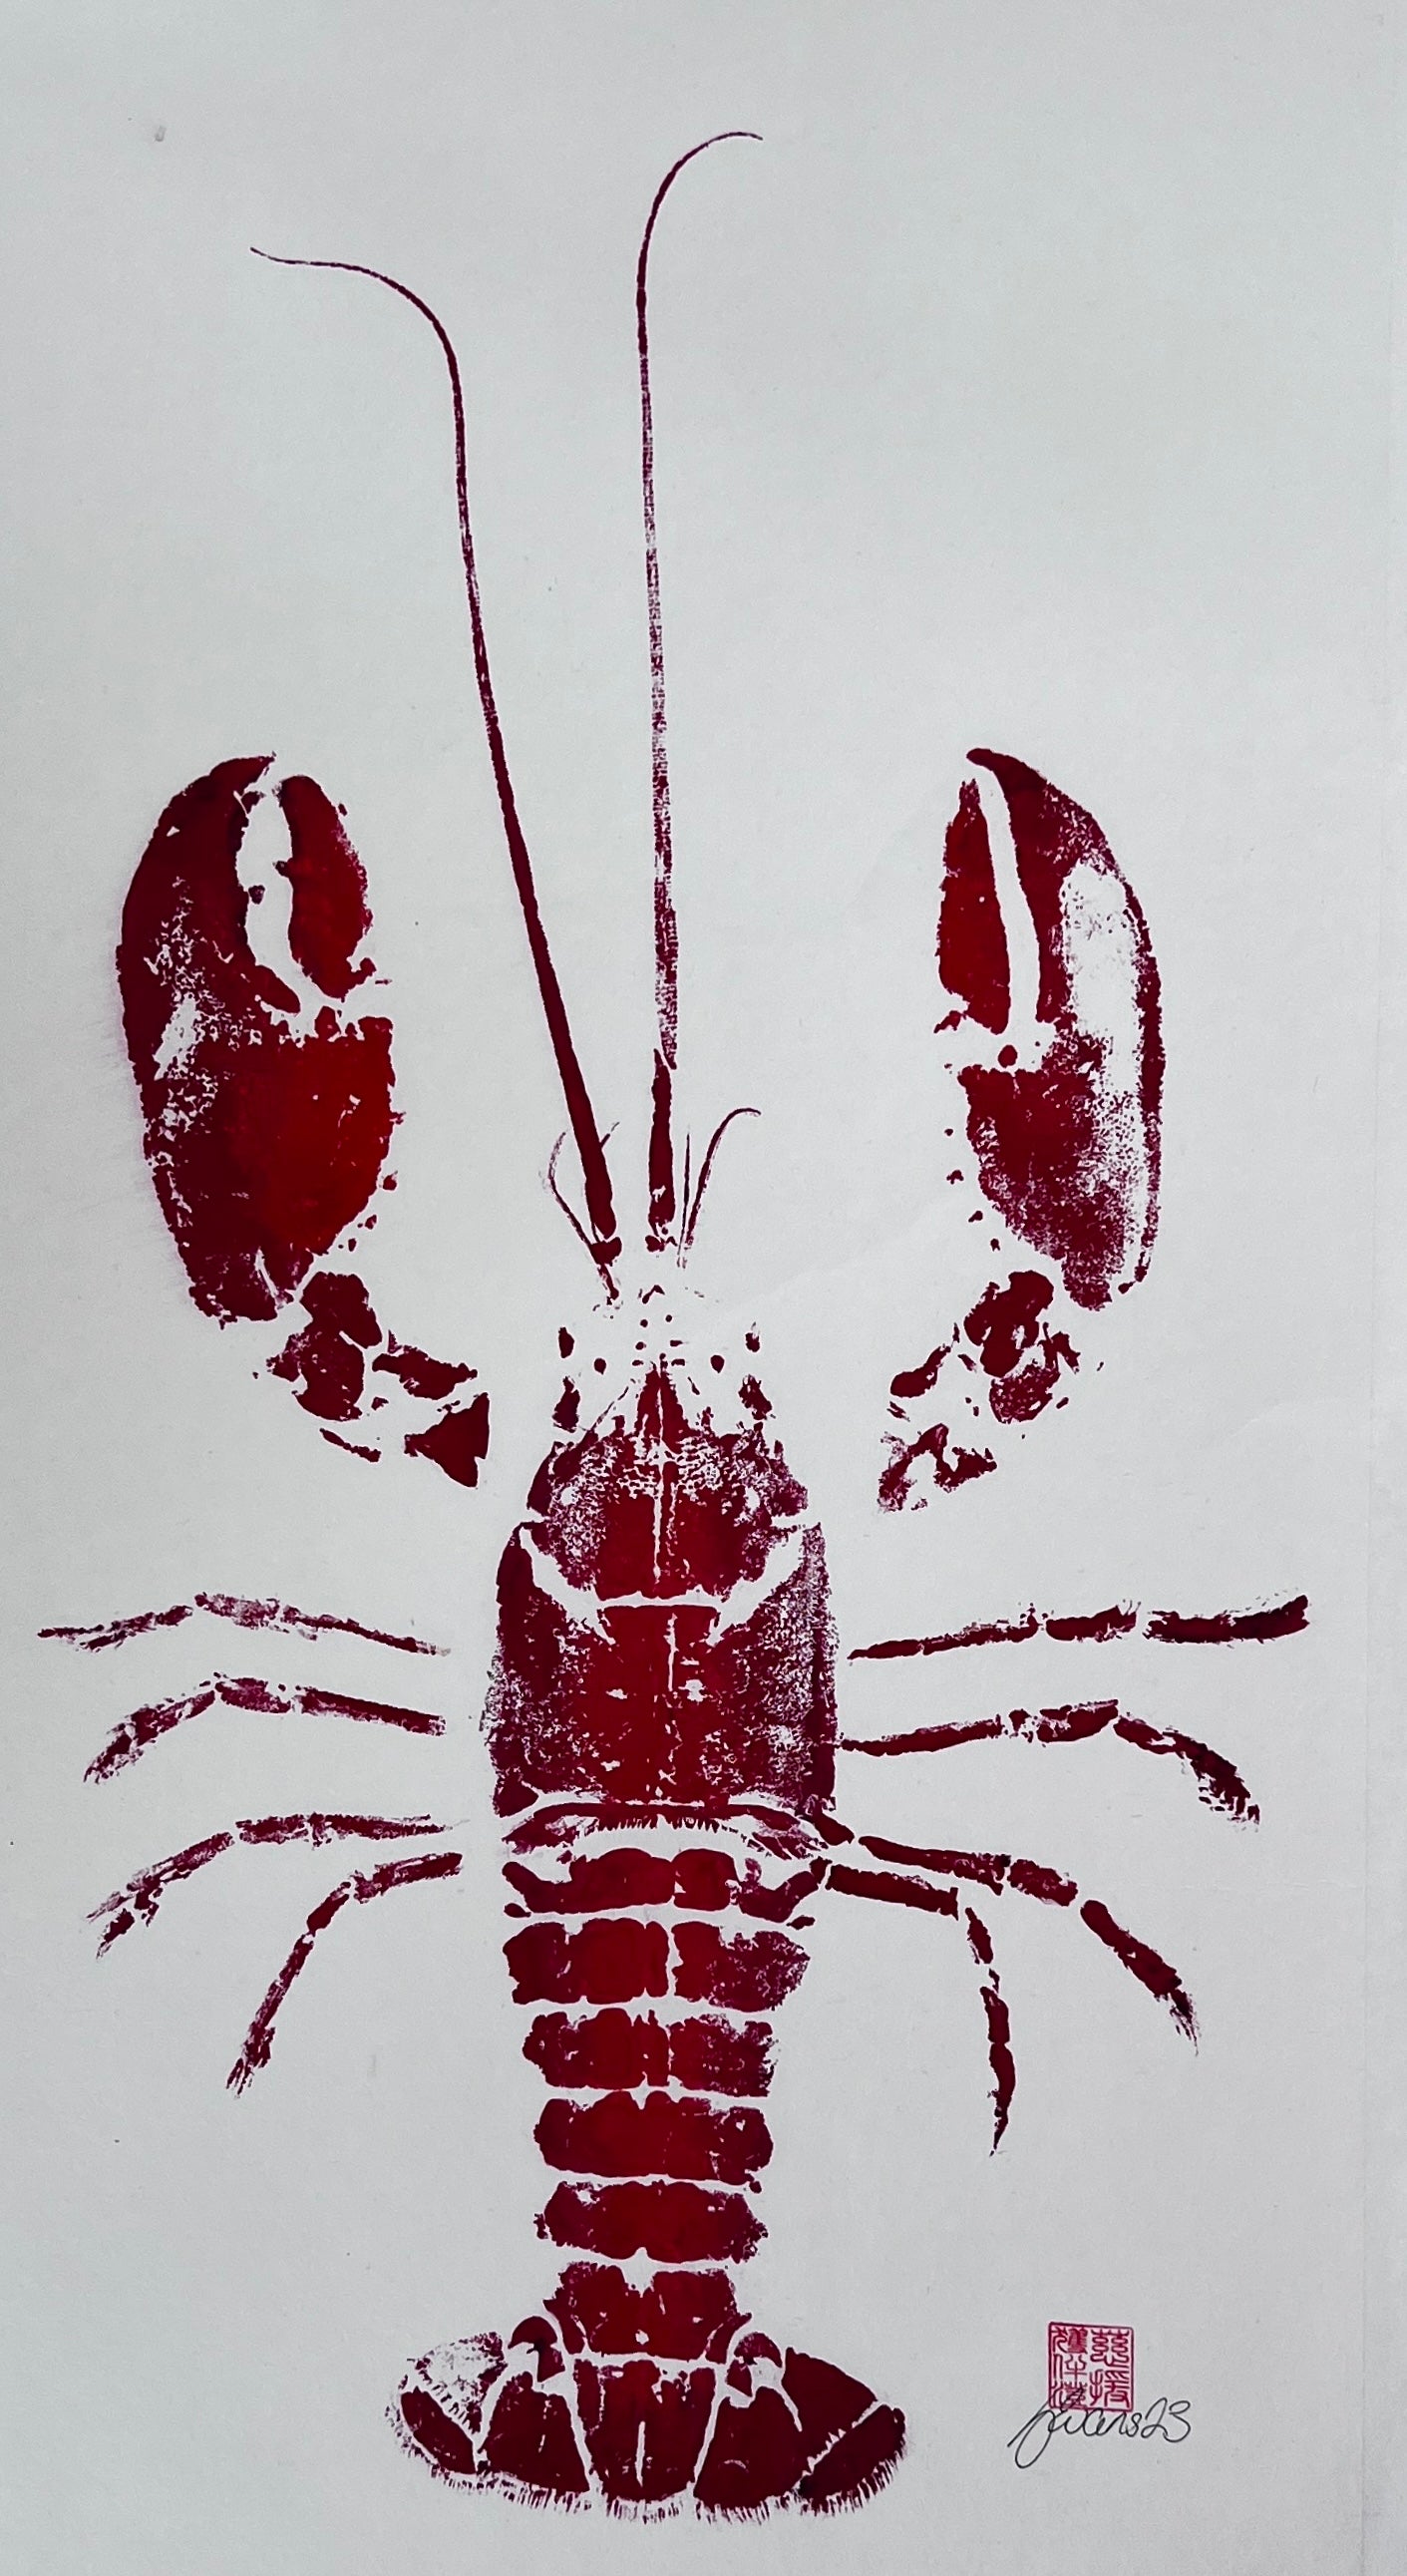 Menai Strait Lobster, Gyotaku Printed in Red ink.